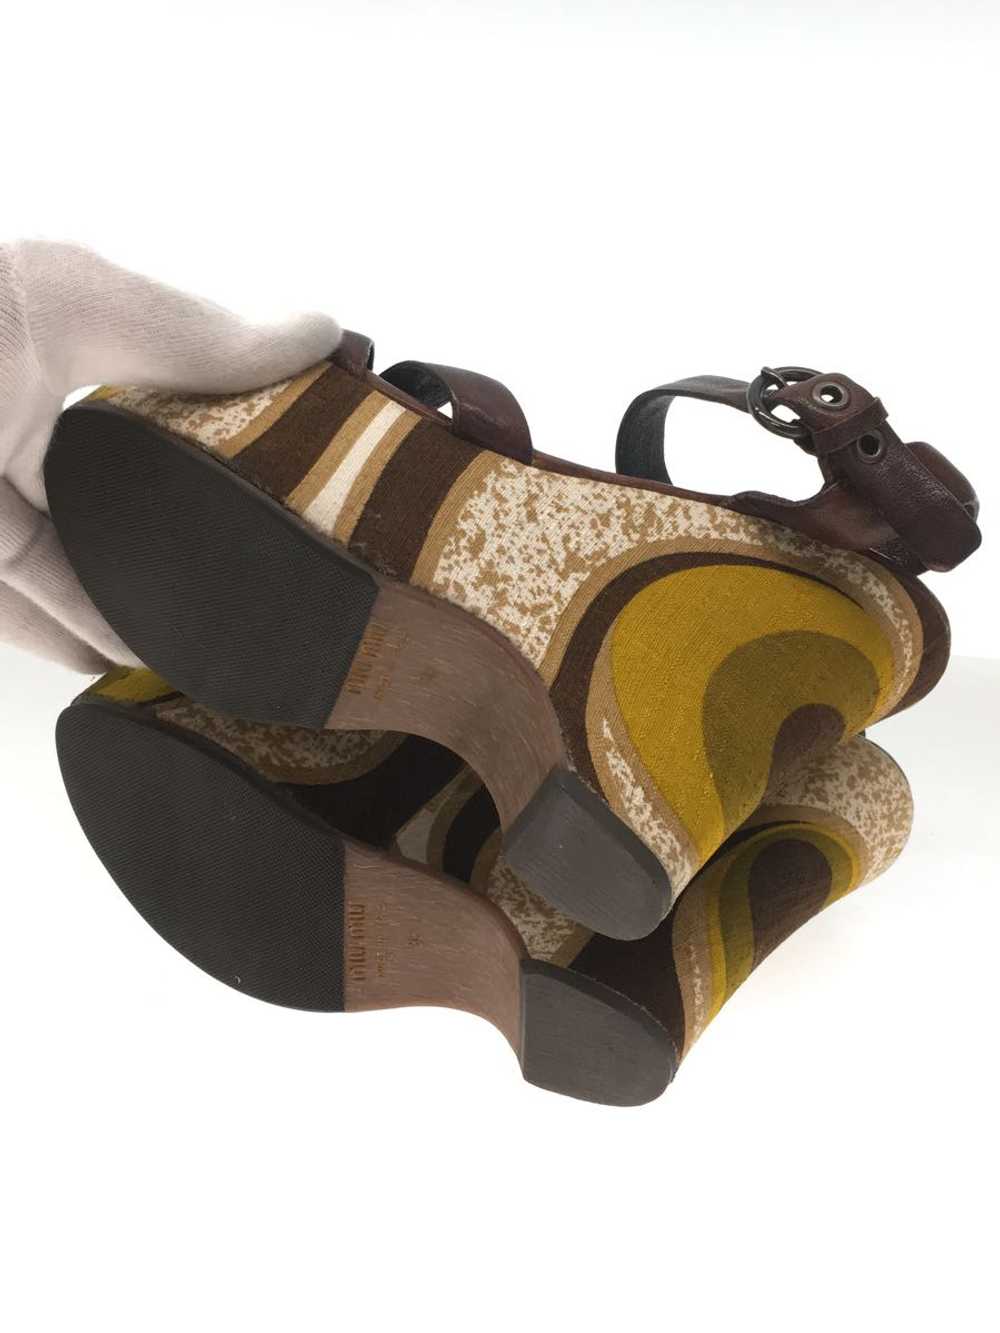 Miu Miu Wedgwood/Sandals/36/Brw/ Shoes BbZ58 - image 3